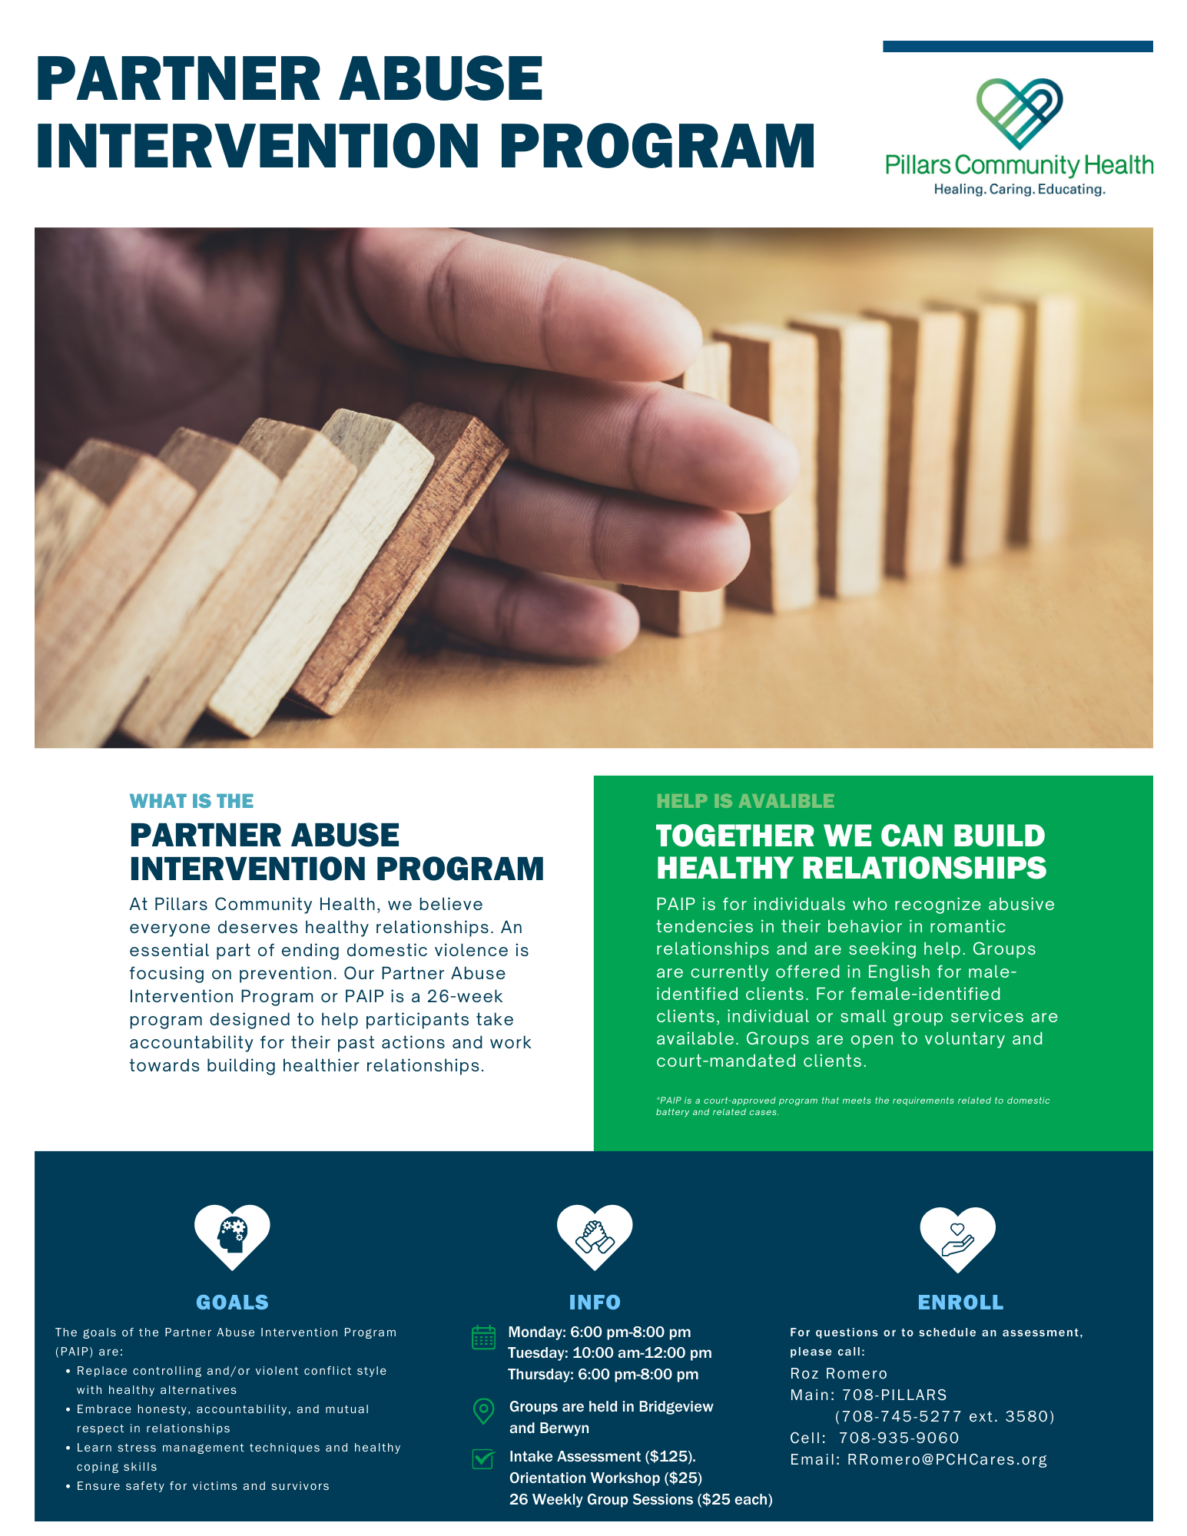 Partner Abuse Intervention Program flyer